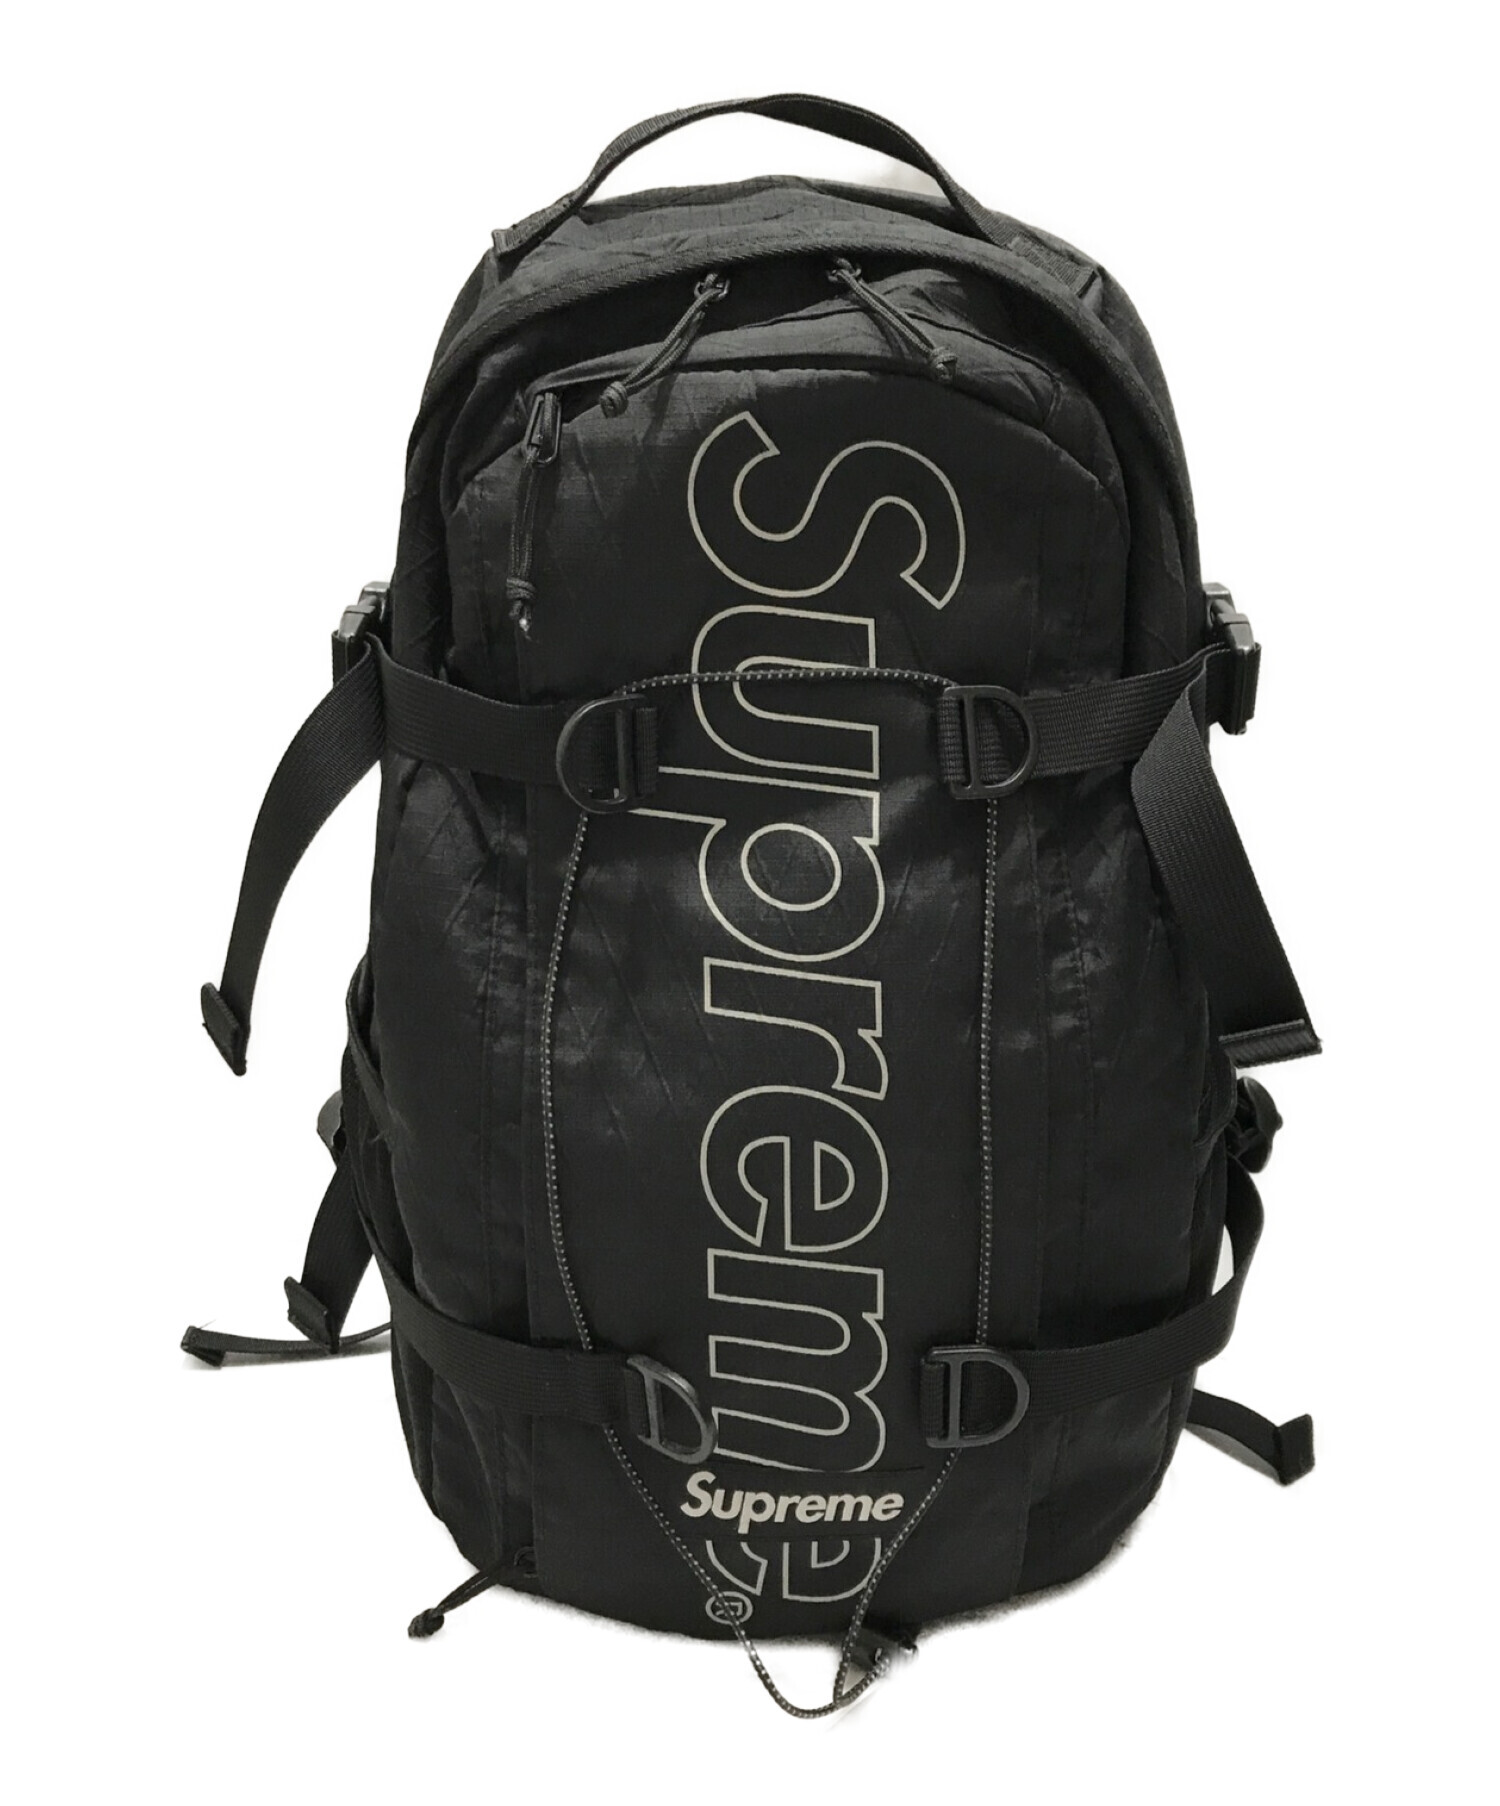 18AW Supreme backpack